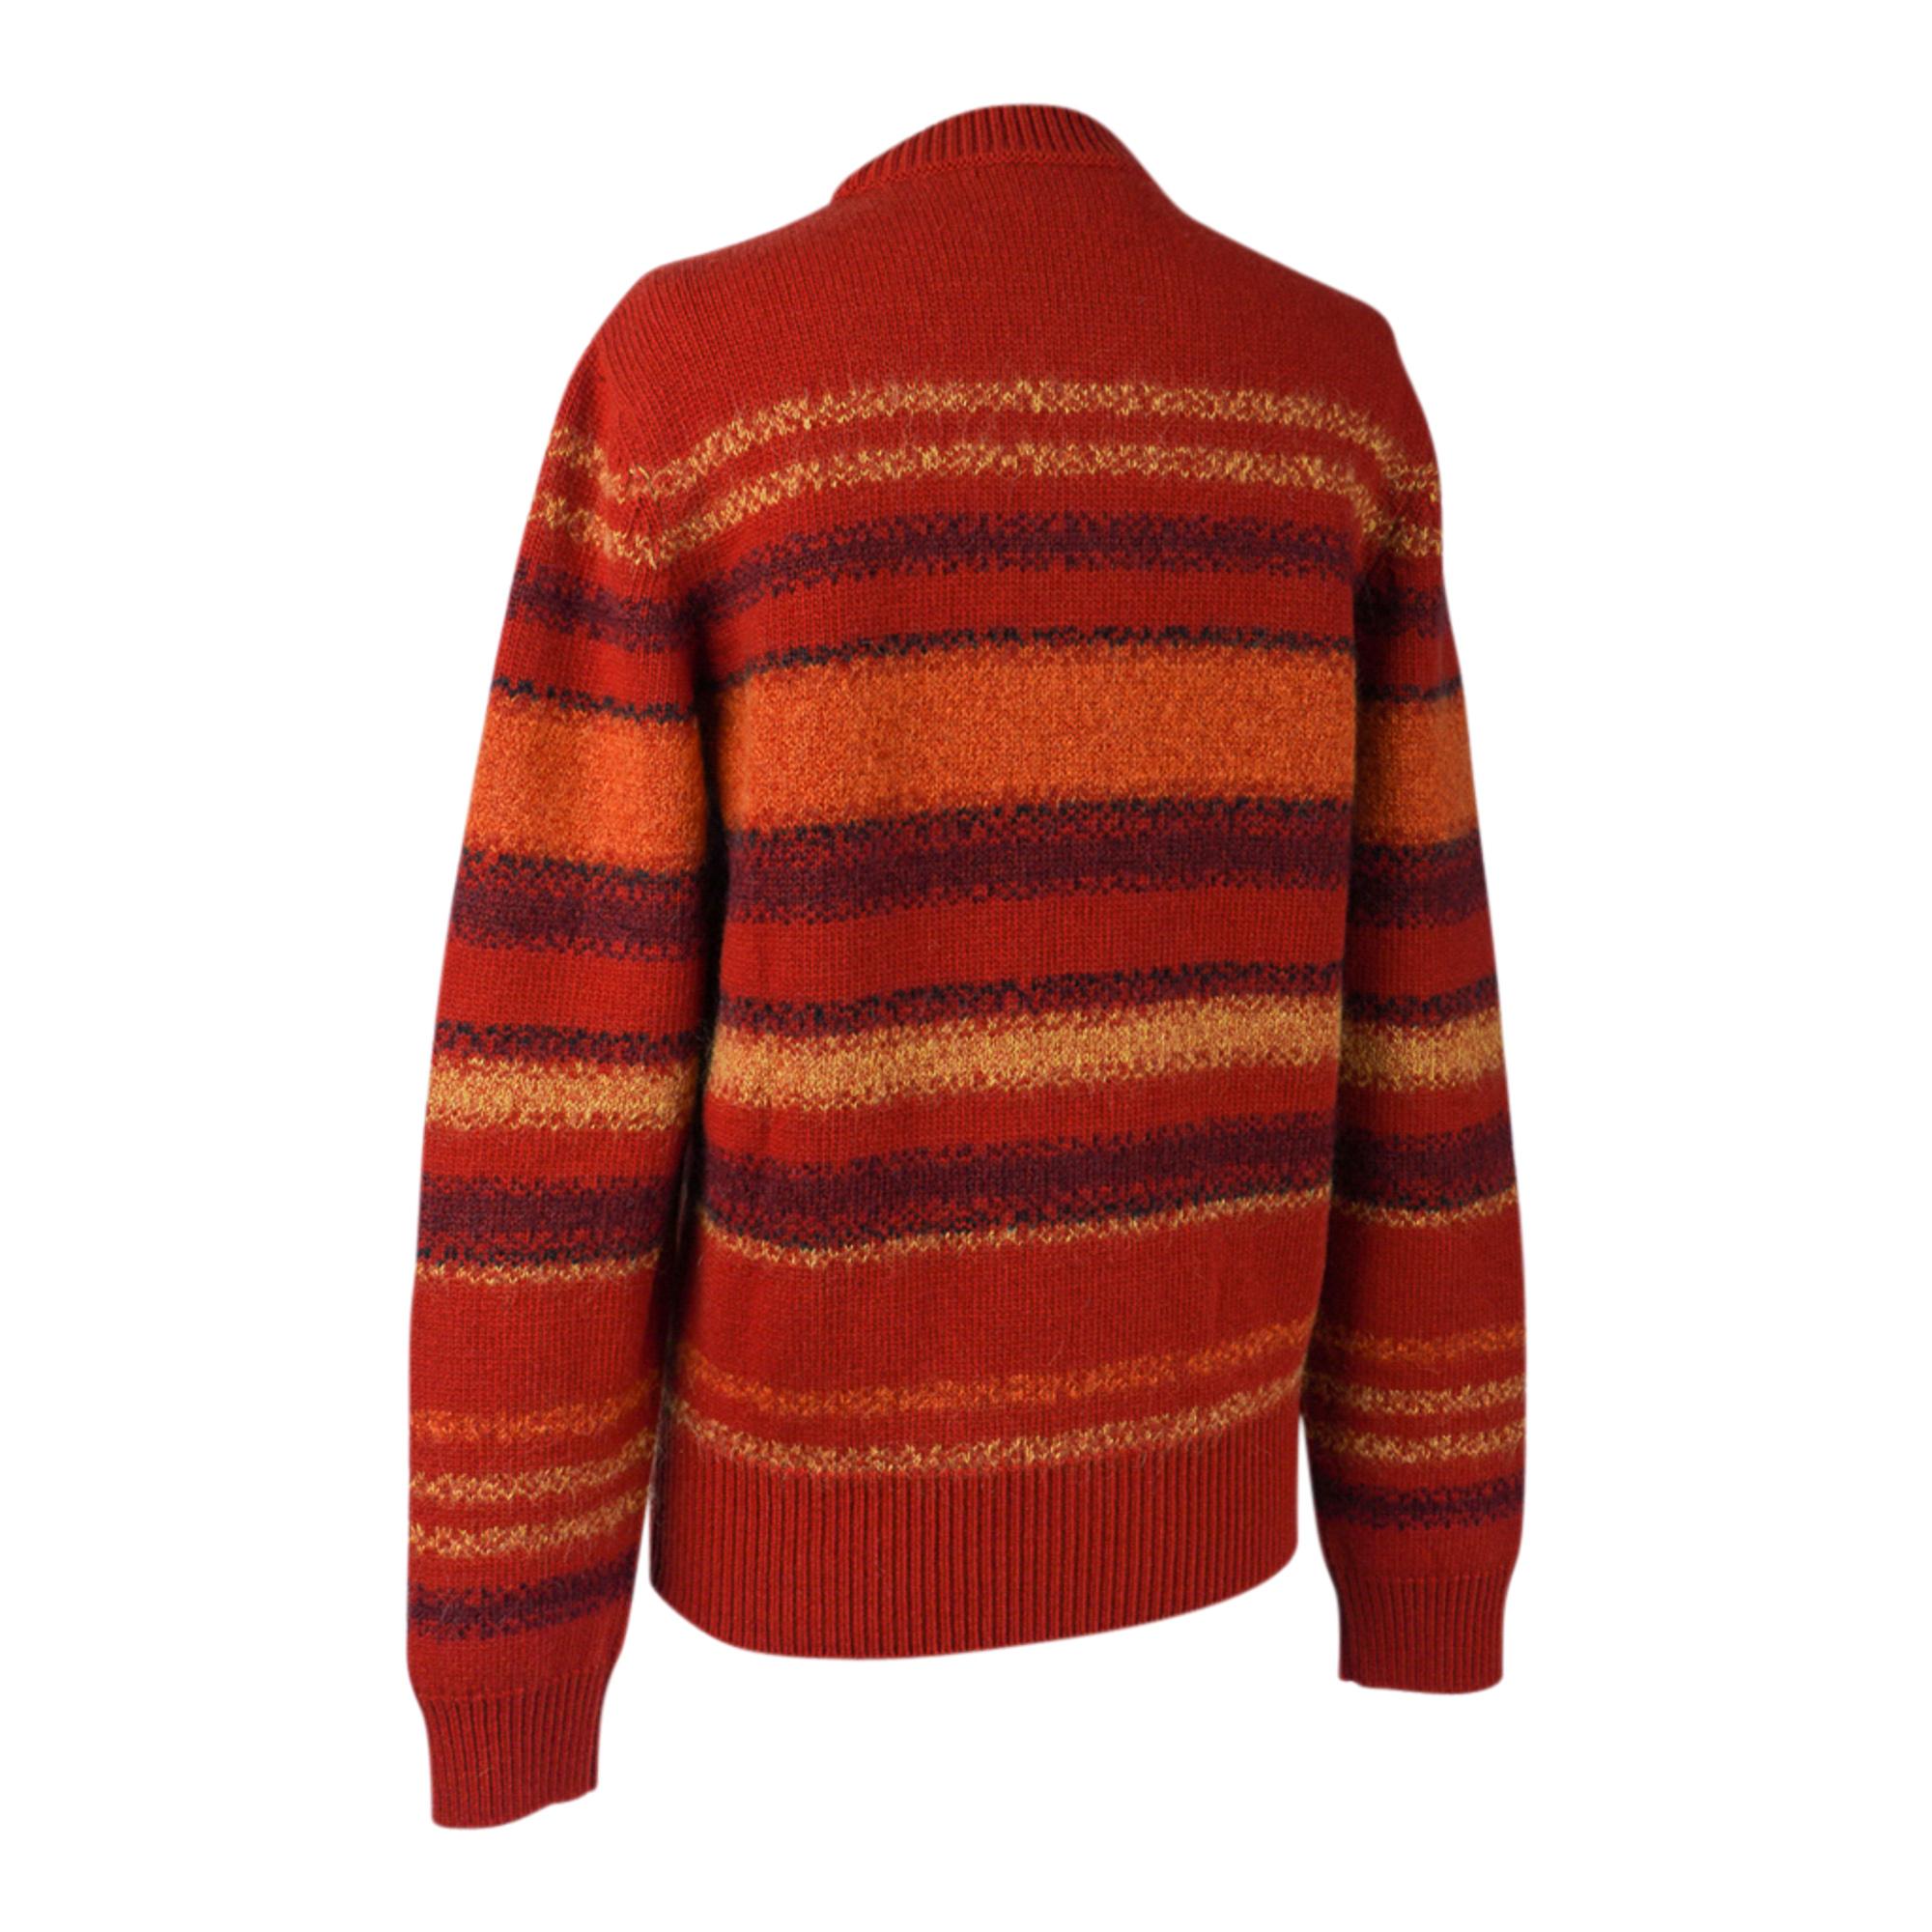 Hermes Men's Sweater Rayures Fondues (Melted Stripes) Orange Brulee Wool M For Sale 1